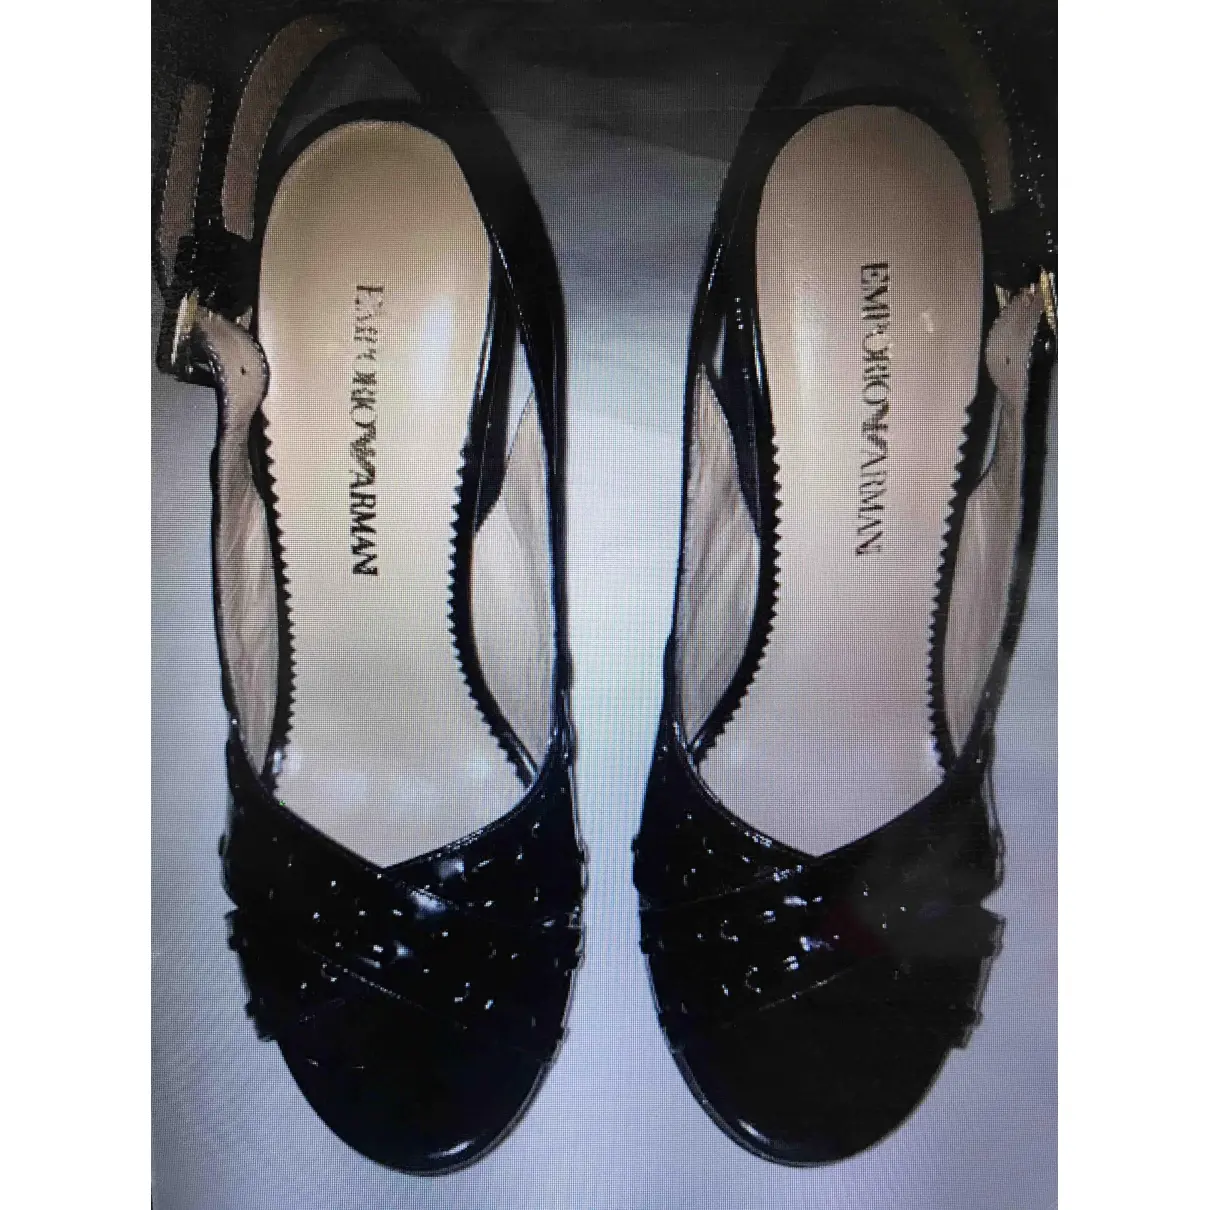 Emporio Armani Patent leather sandal for sale